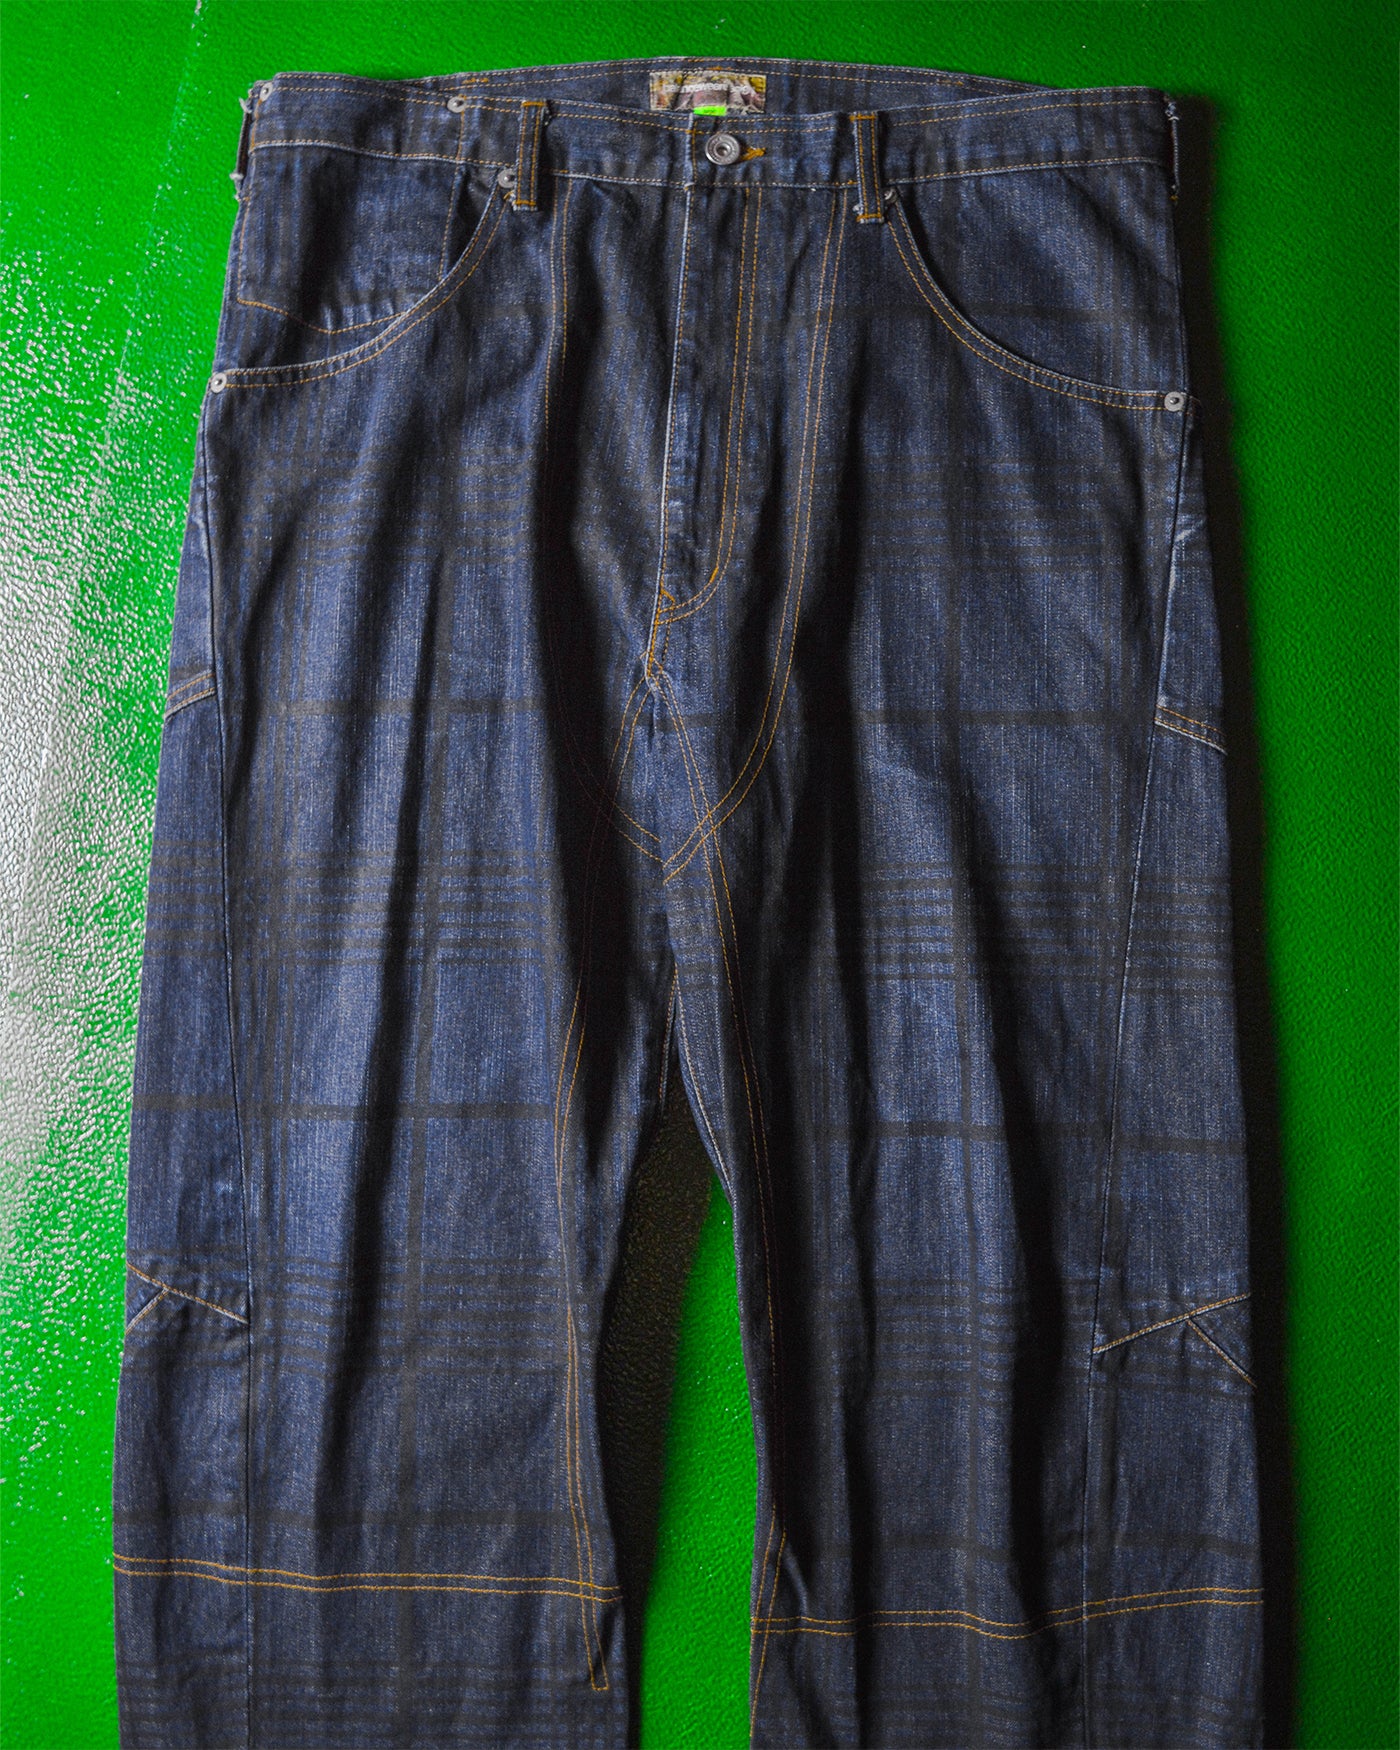 Early 2000s Dark Wash Printed Check Denim  Jeans (34~36)